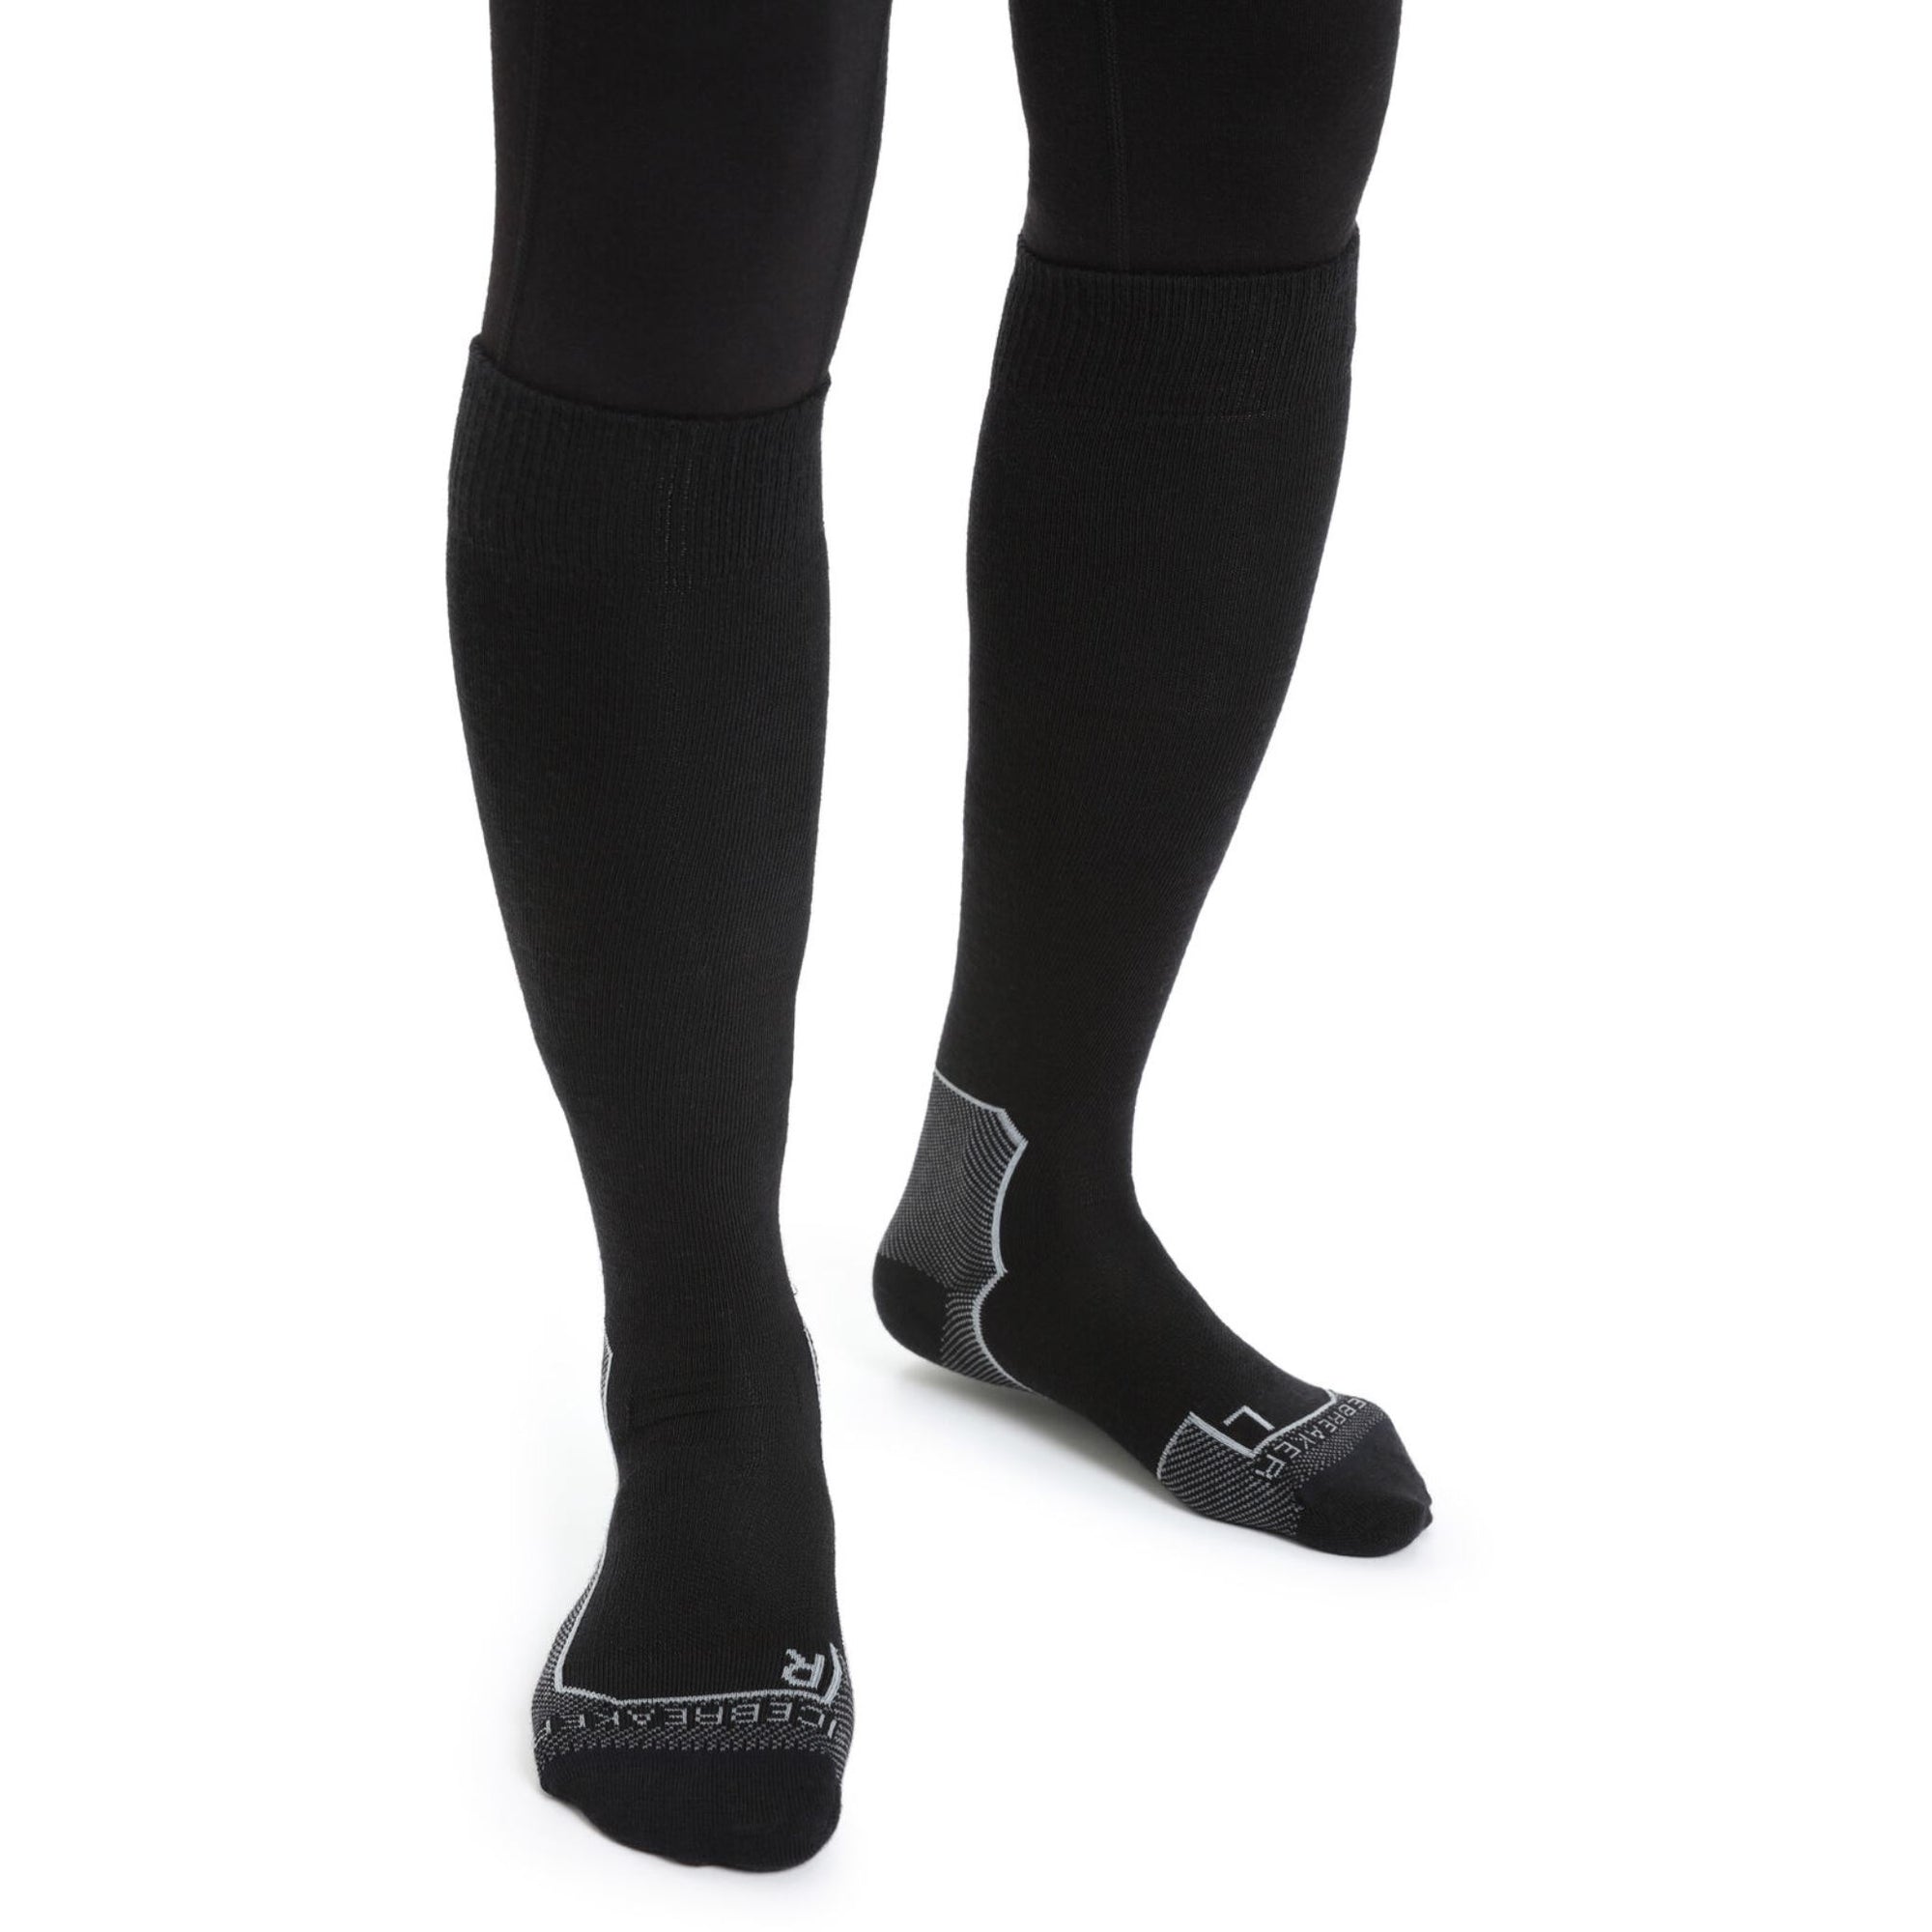 Womens Icebreaker Merino Ski+ Ultra Light Socks - Black Socks Icebreaker S - (US5.5-7/EU35-37) 